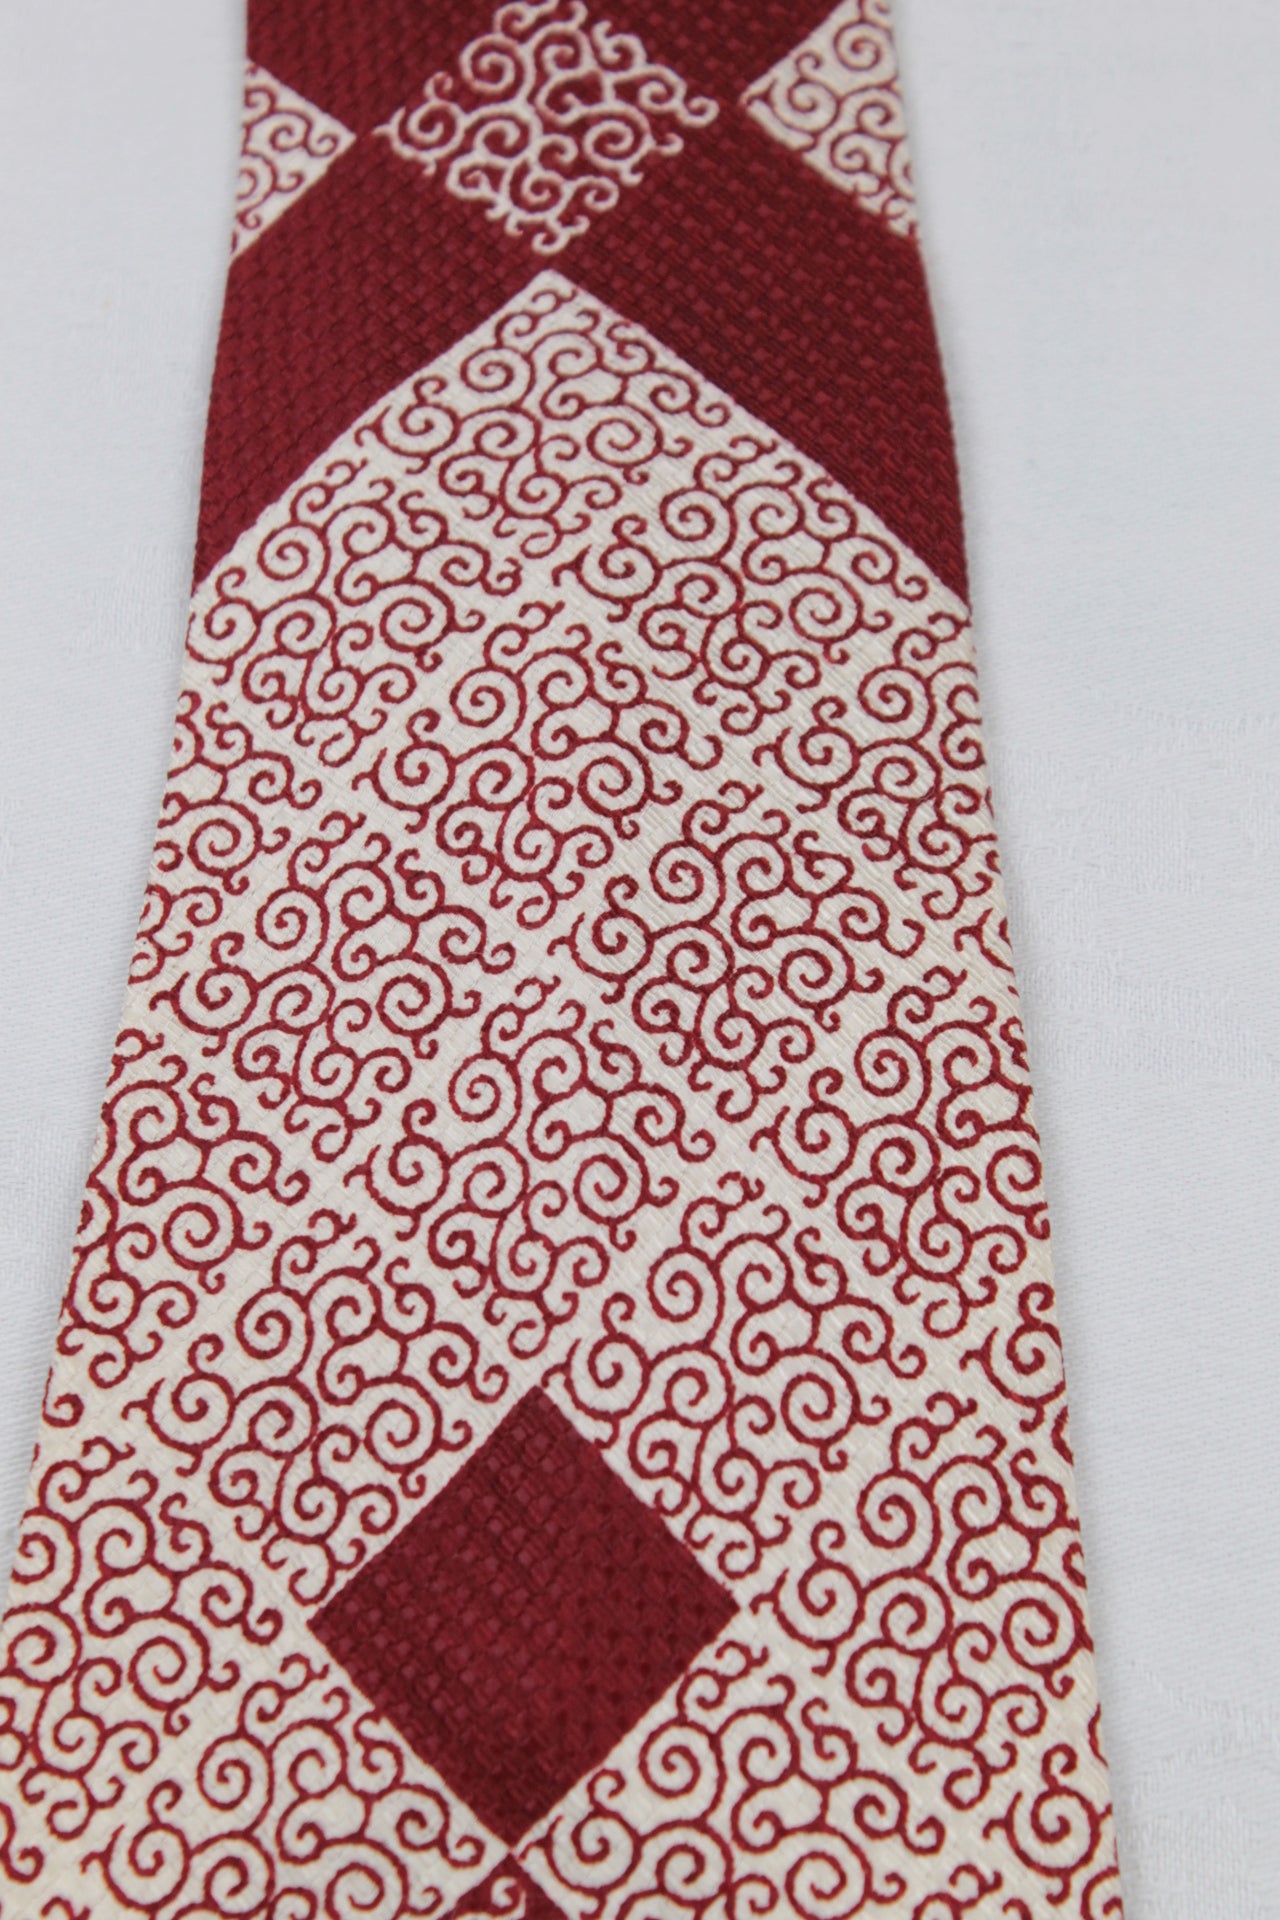 Vintage Haband New Jersey Dark Red White Pattern Swing Tie 1940s/50s